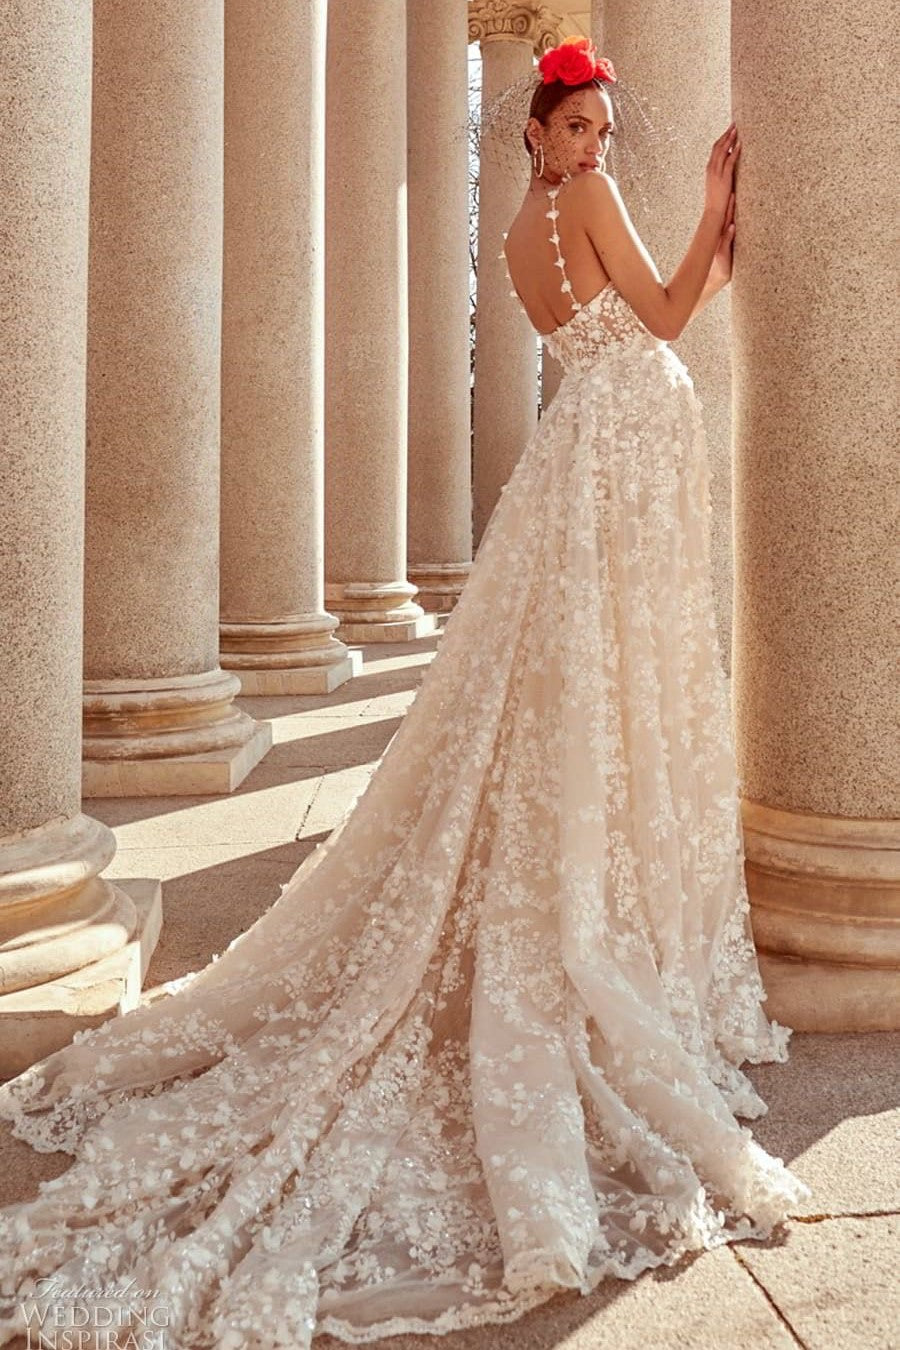 Floral lace mermaid wedding dress, 2 in 1 luxury mermaid wedding dress